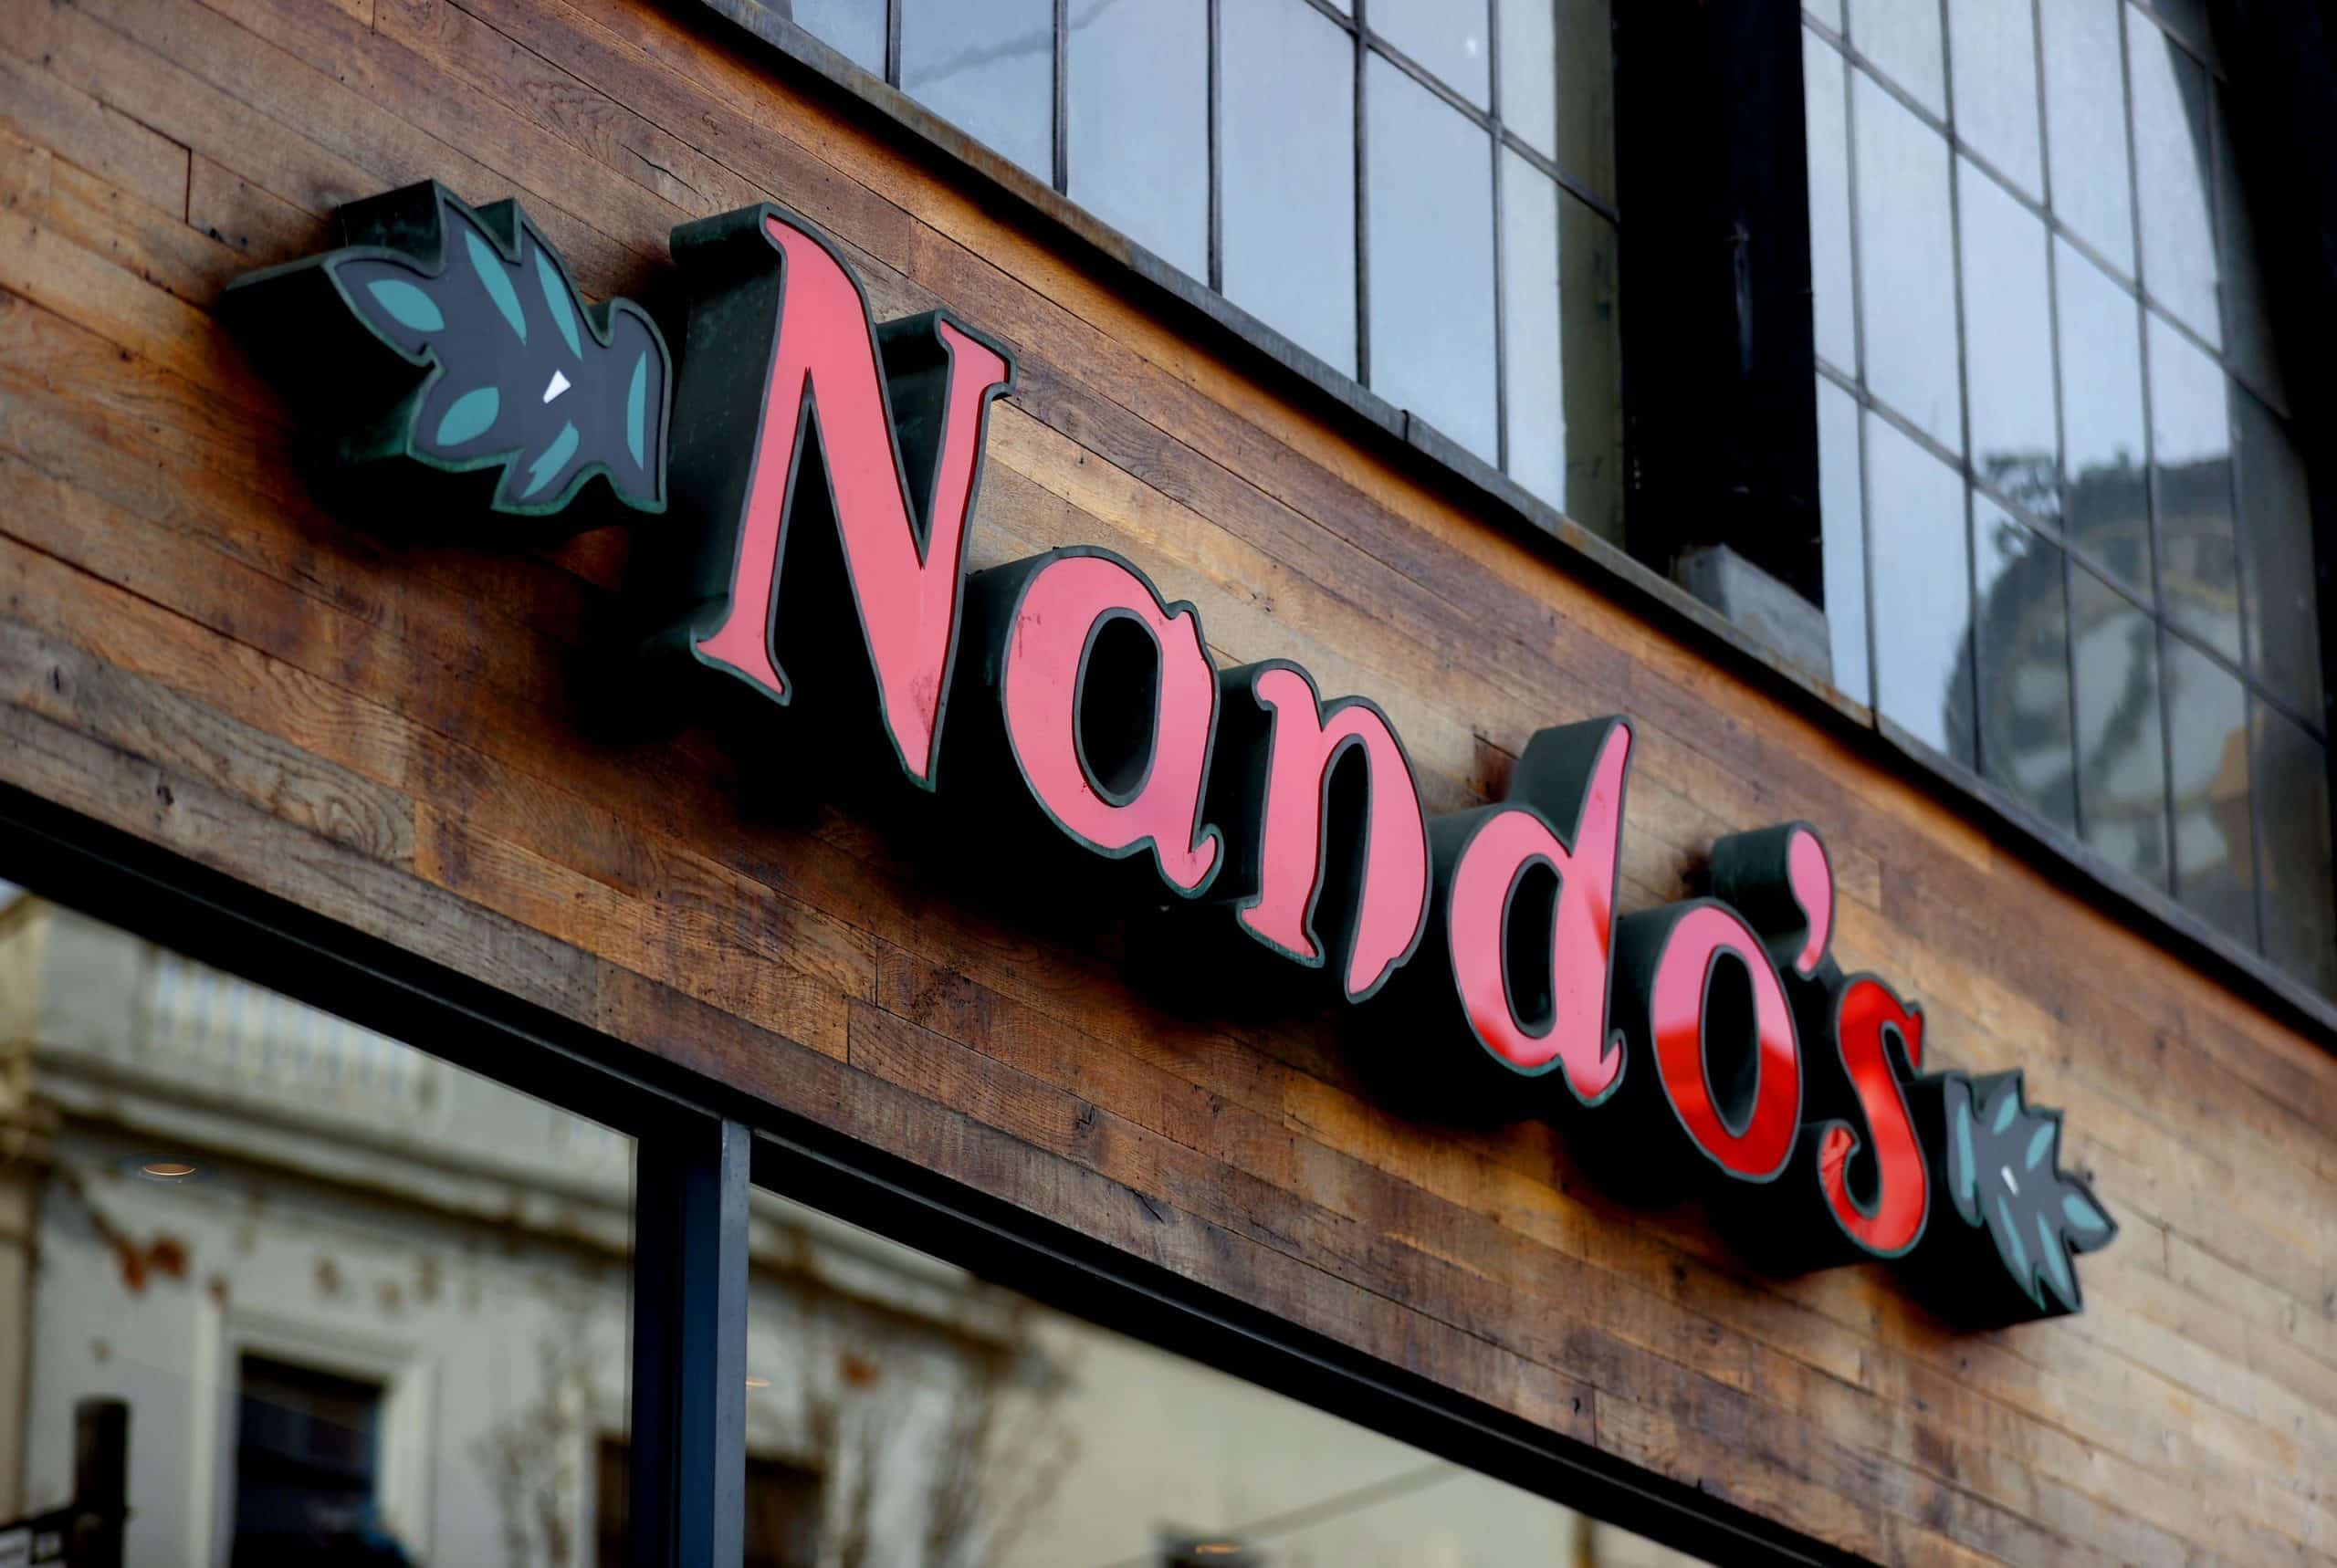 Brexit bites: Nando’s closes restaurants amid chicken shortage